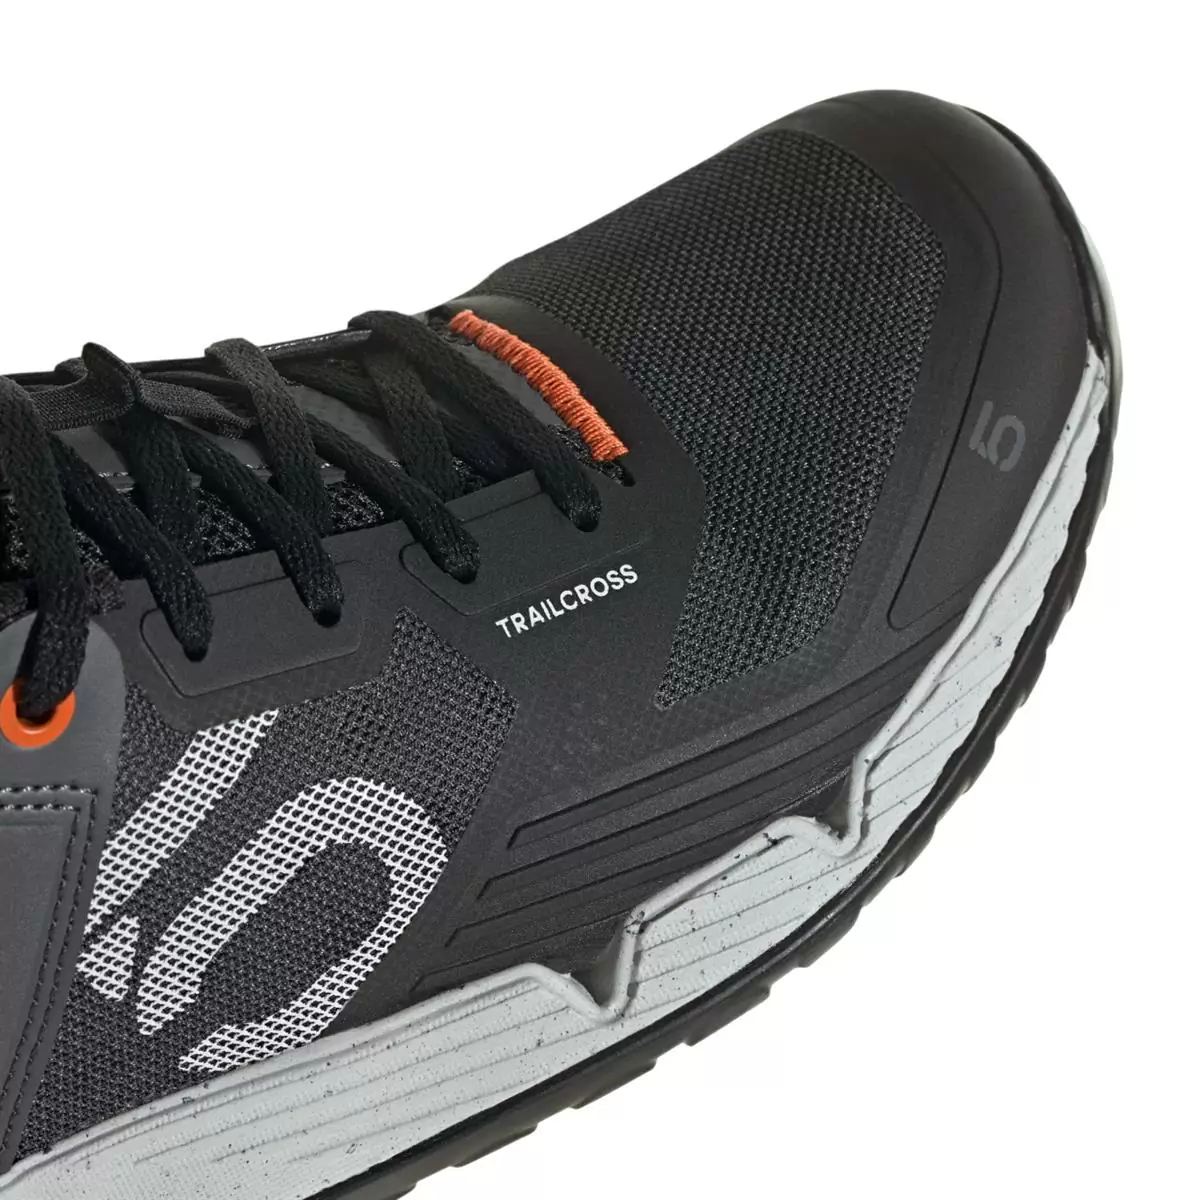 5.10 Trailcross XT Flat MTB Shoes Black/Grey Size 42.5 #6